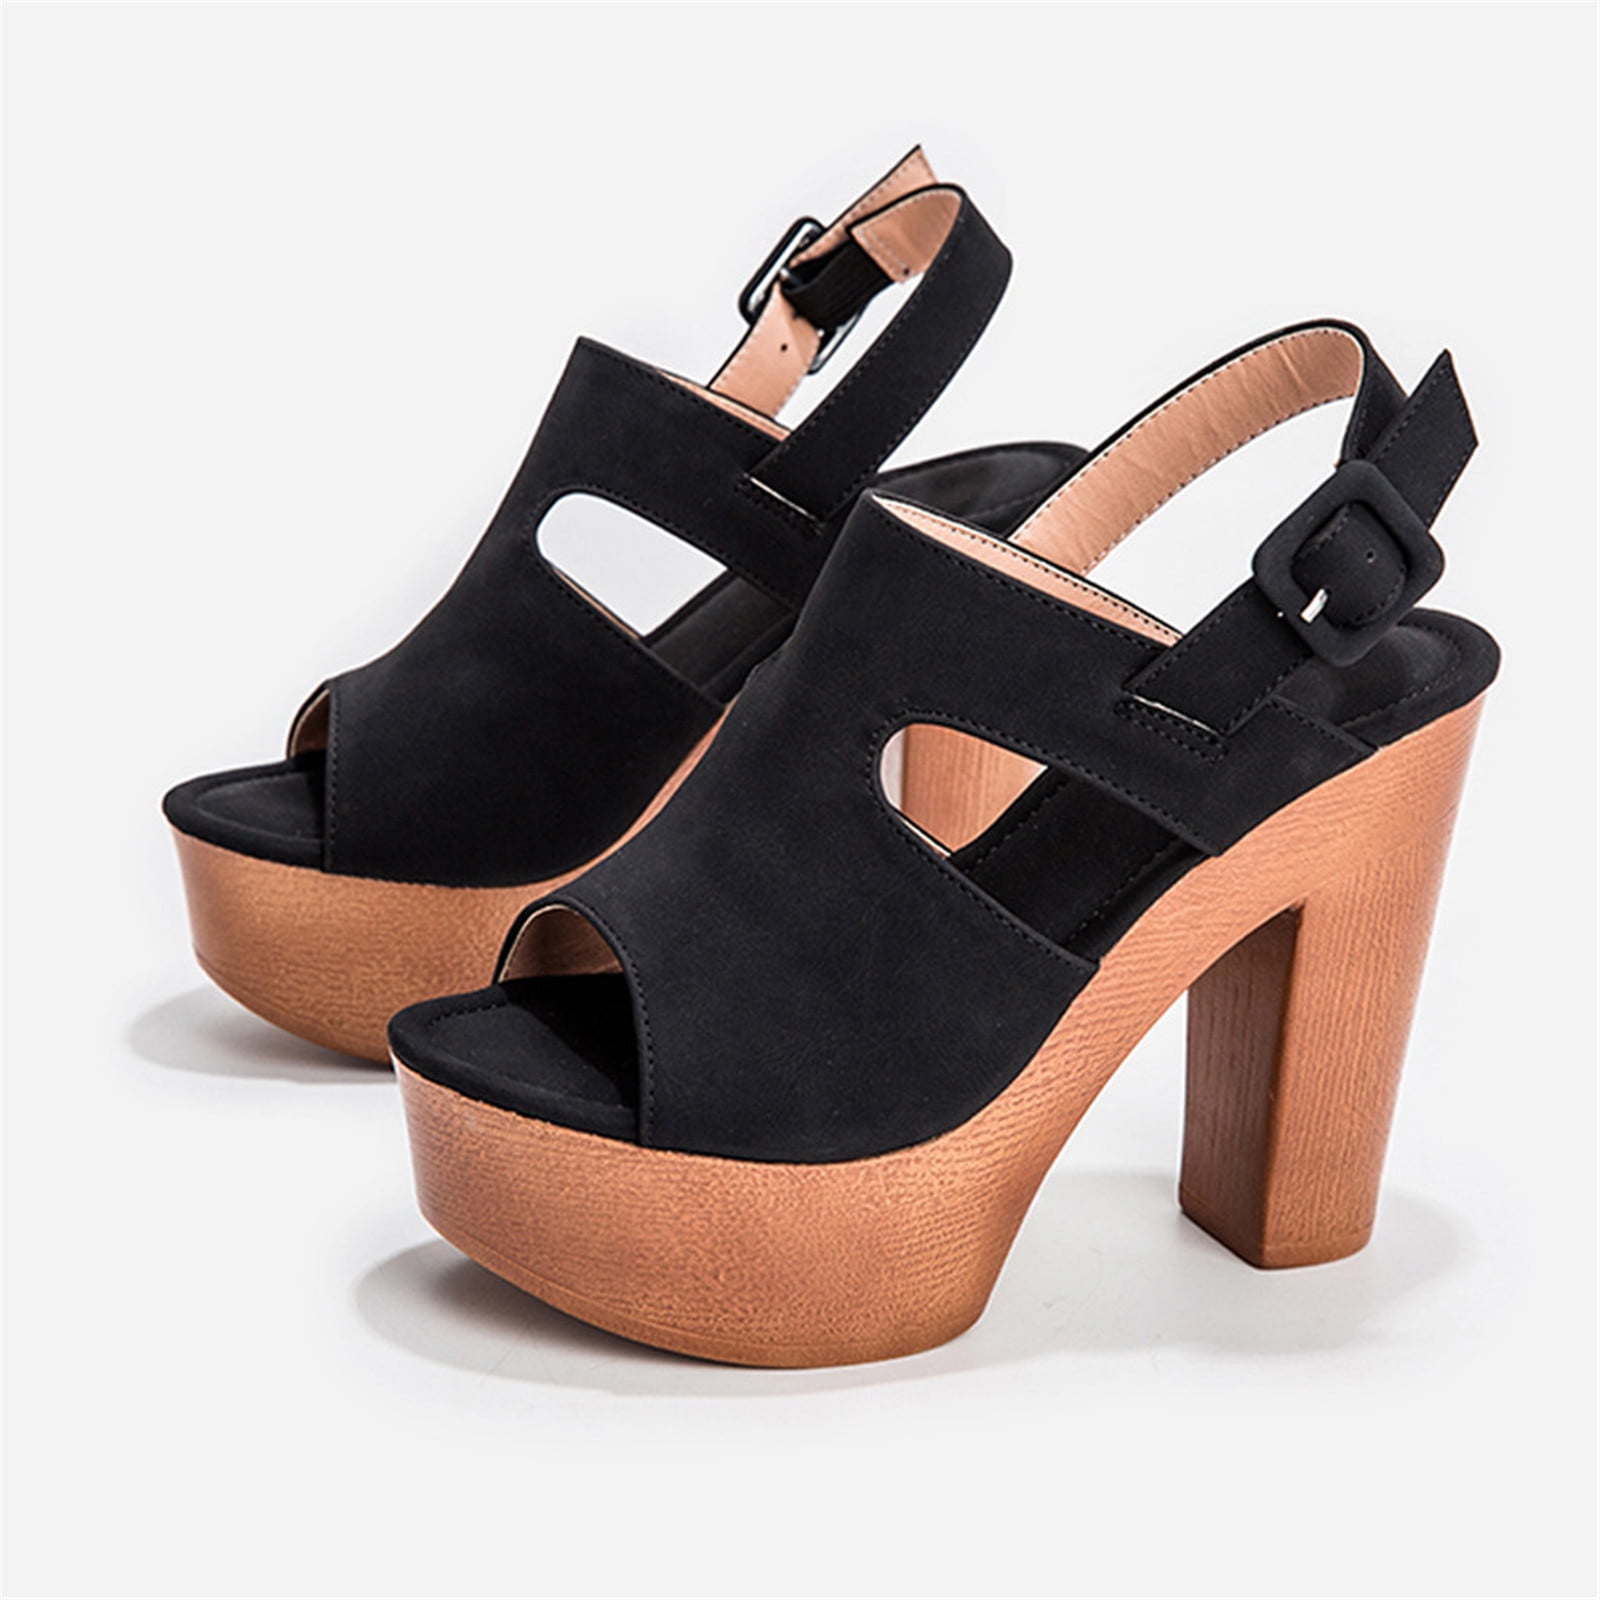 Elegant Black Sandals For Women, Minimalist Platform Chunky Heeled